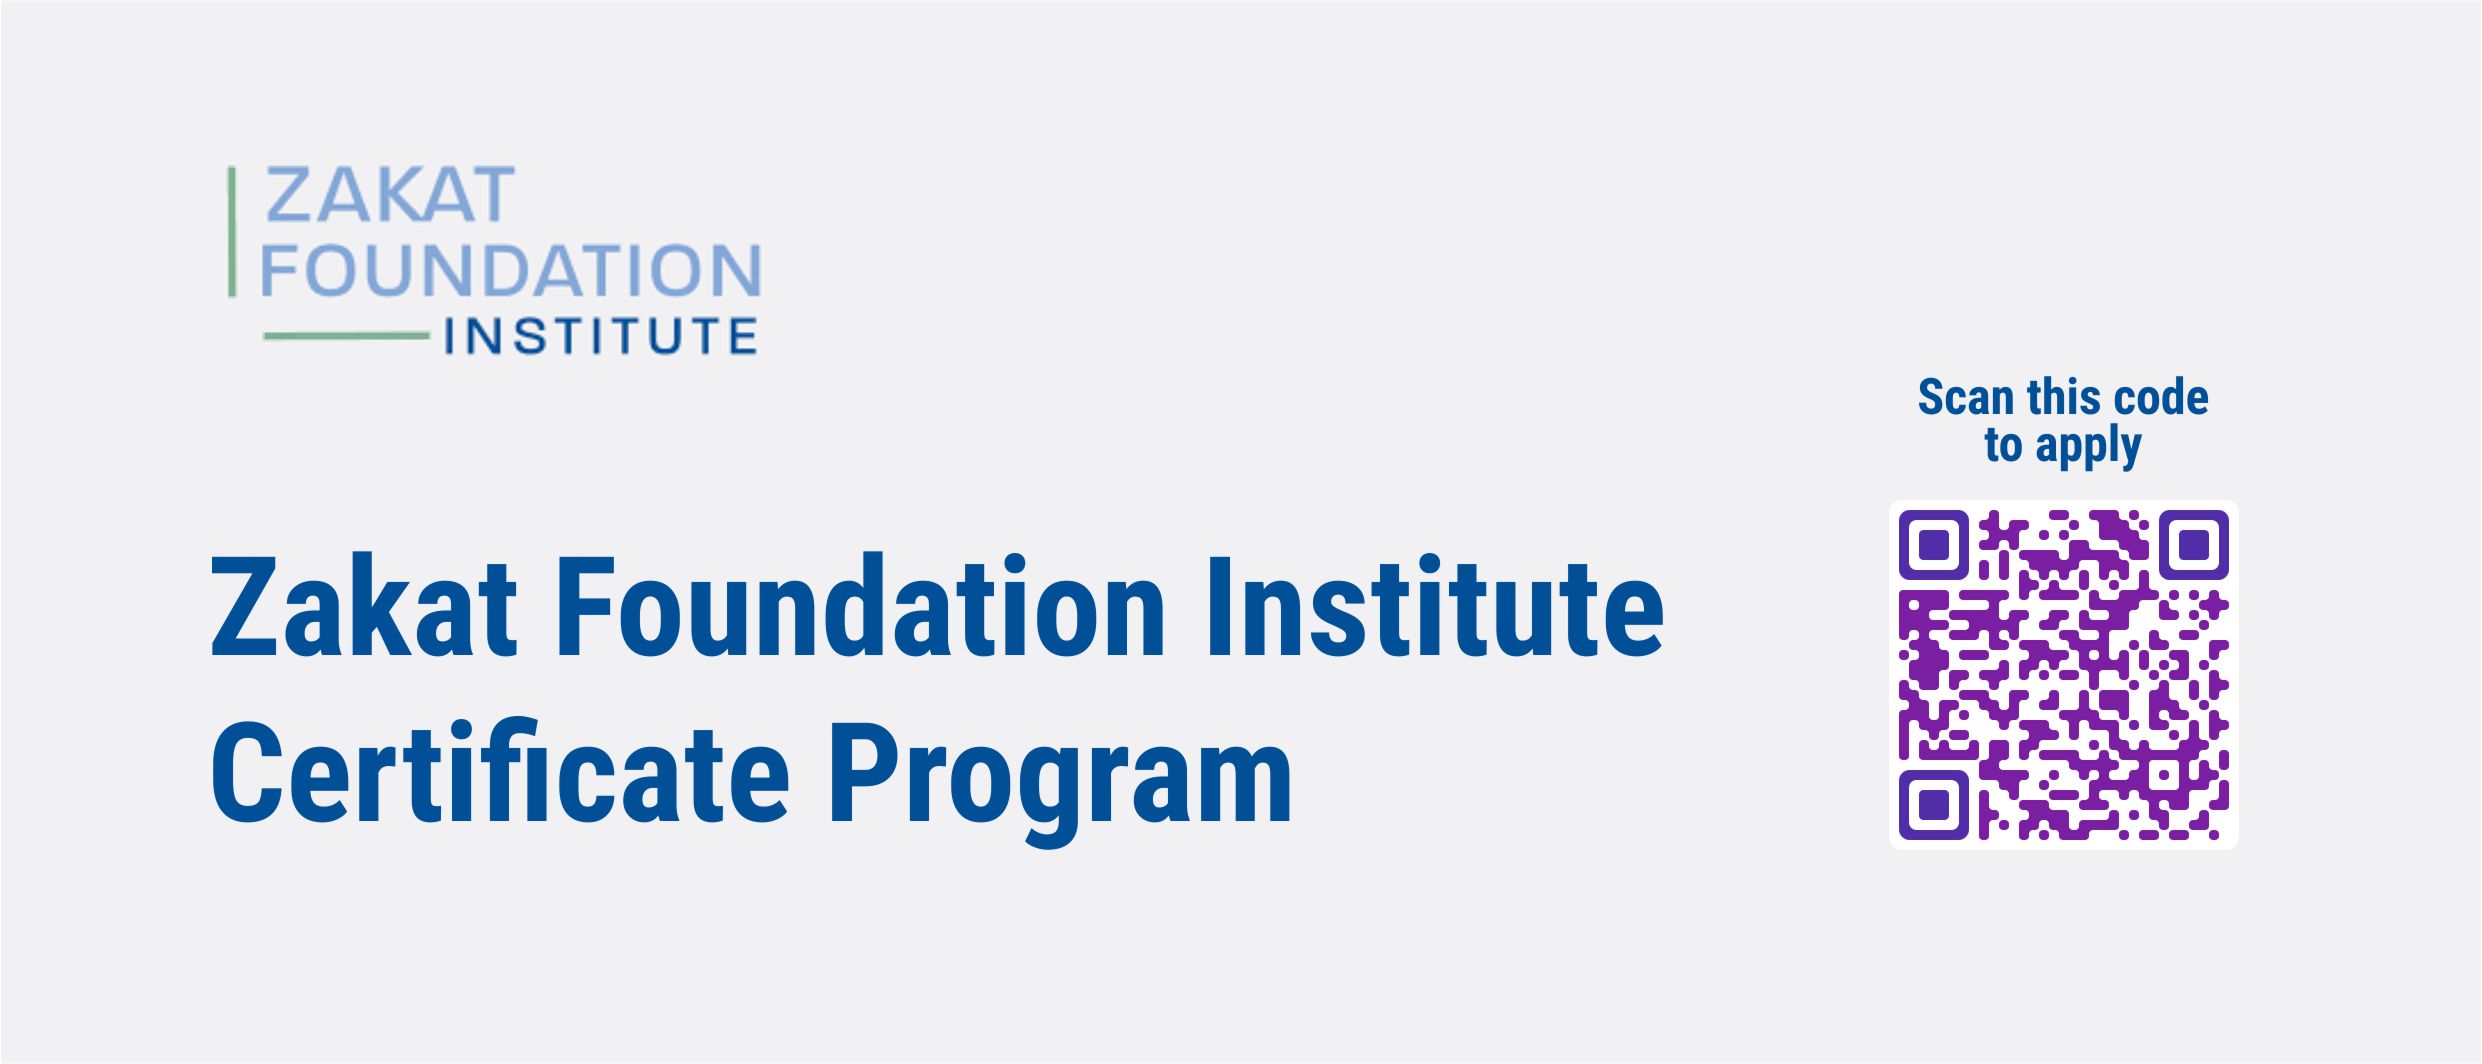 Zakat Foundation Institute Certificate Program